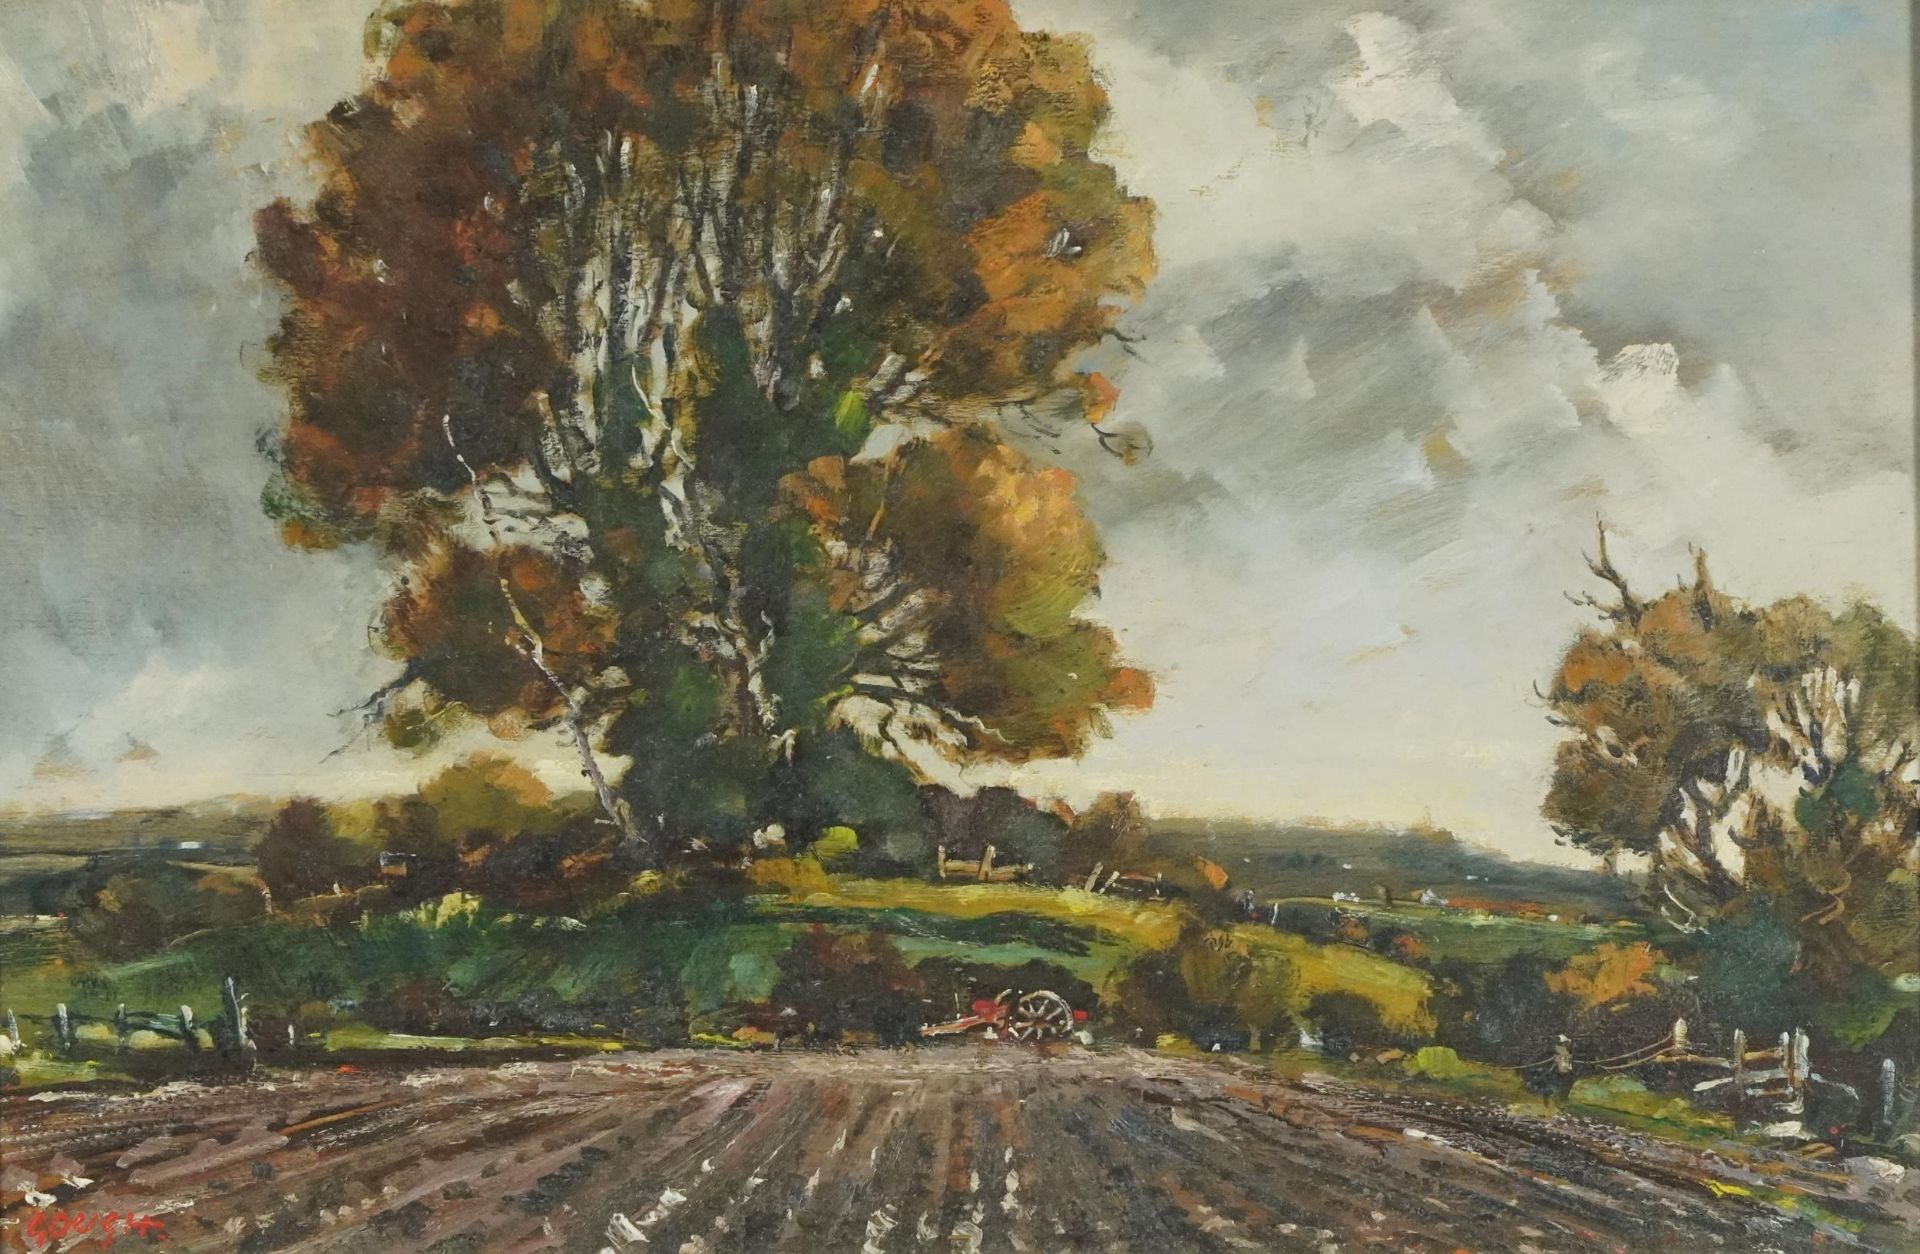 Gough - Harvest scene, Elms near Raglan, Impressionist oil on board, mounted and framed, 44cm x 29cm